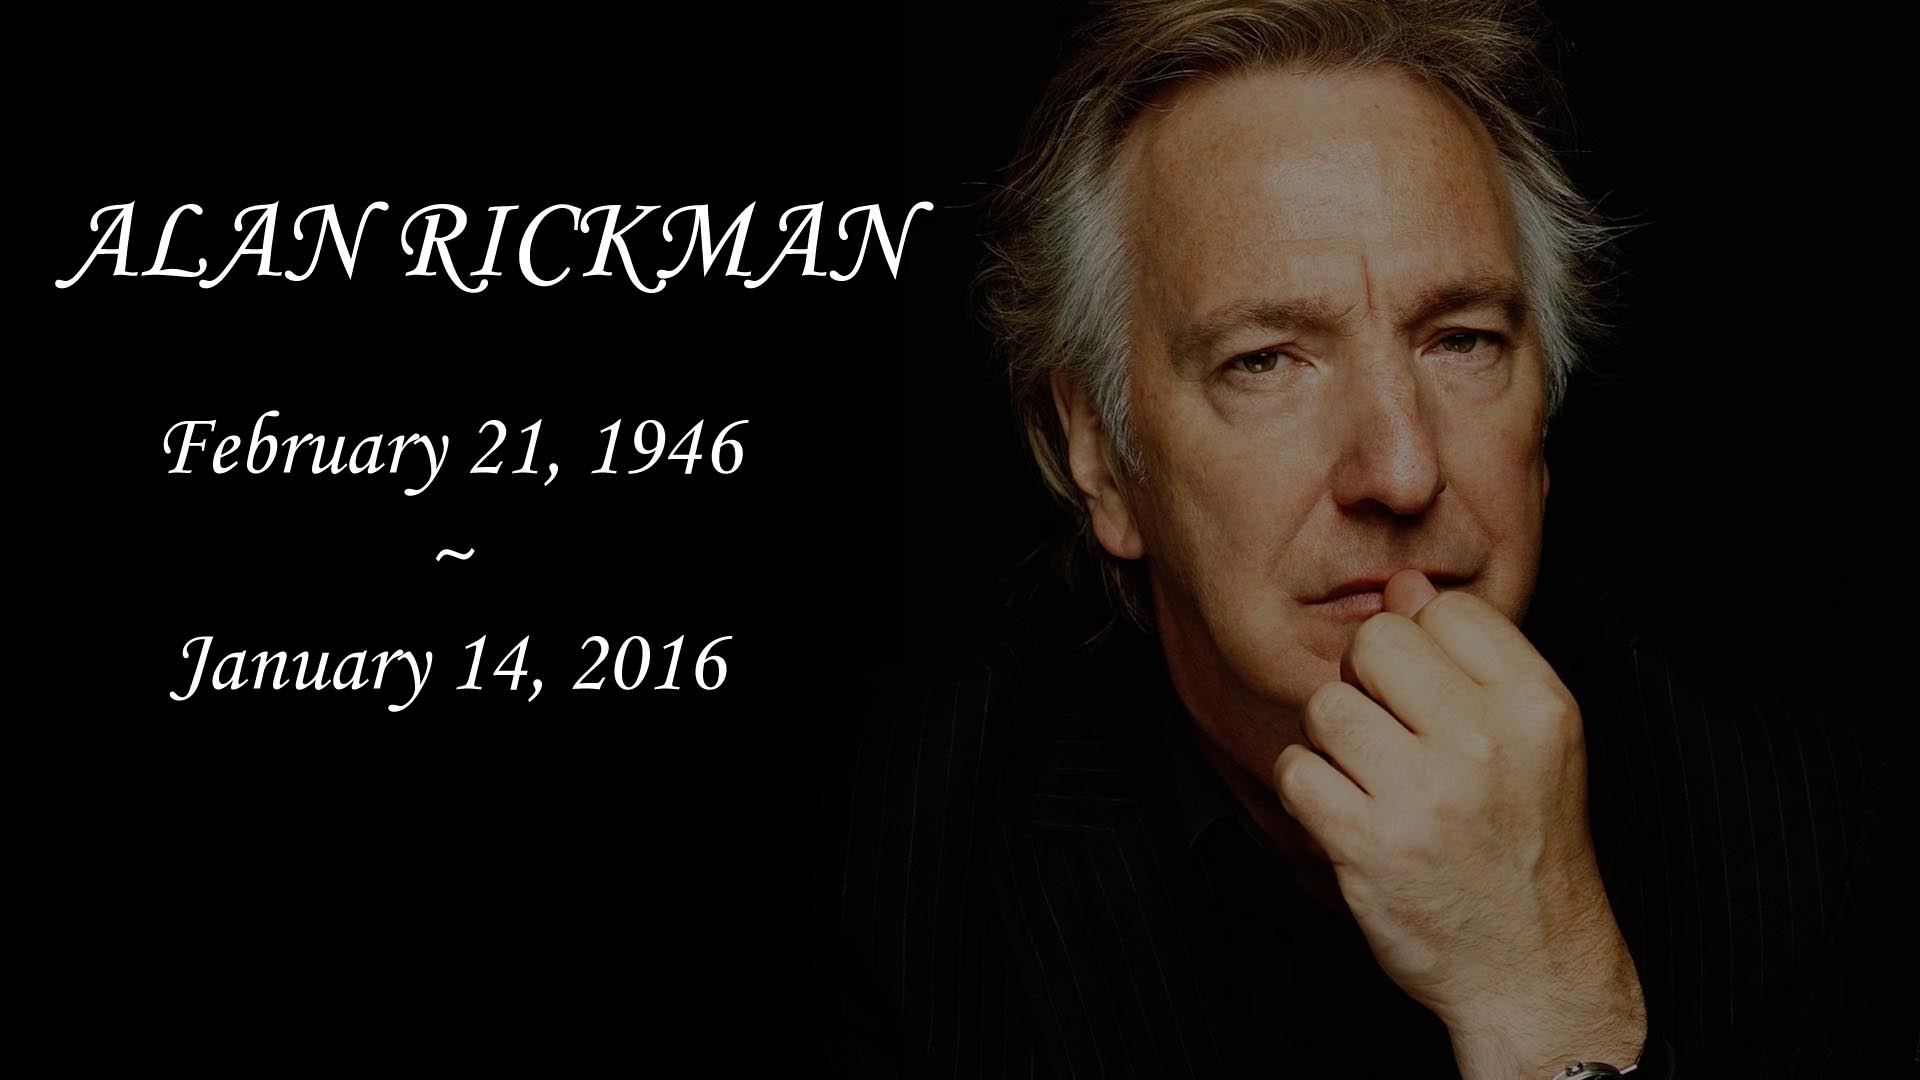 Harry Potter's Alan Rickman Dead at 69